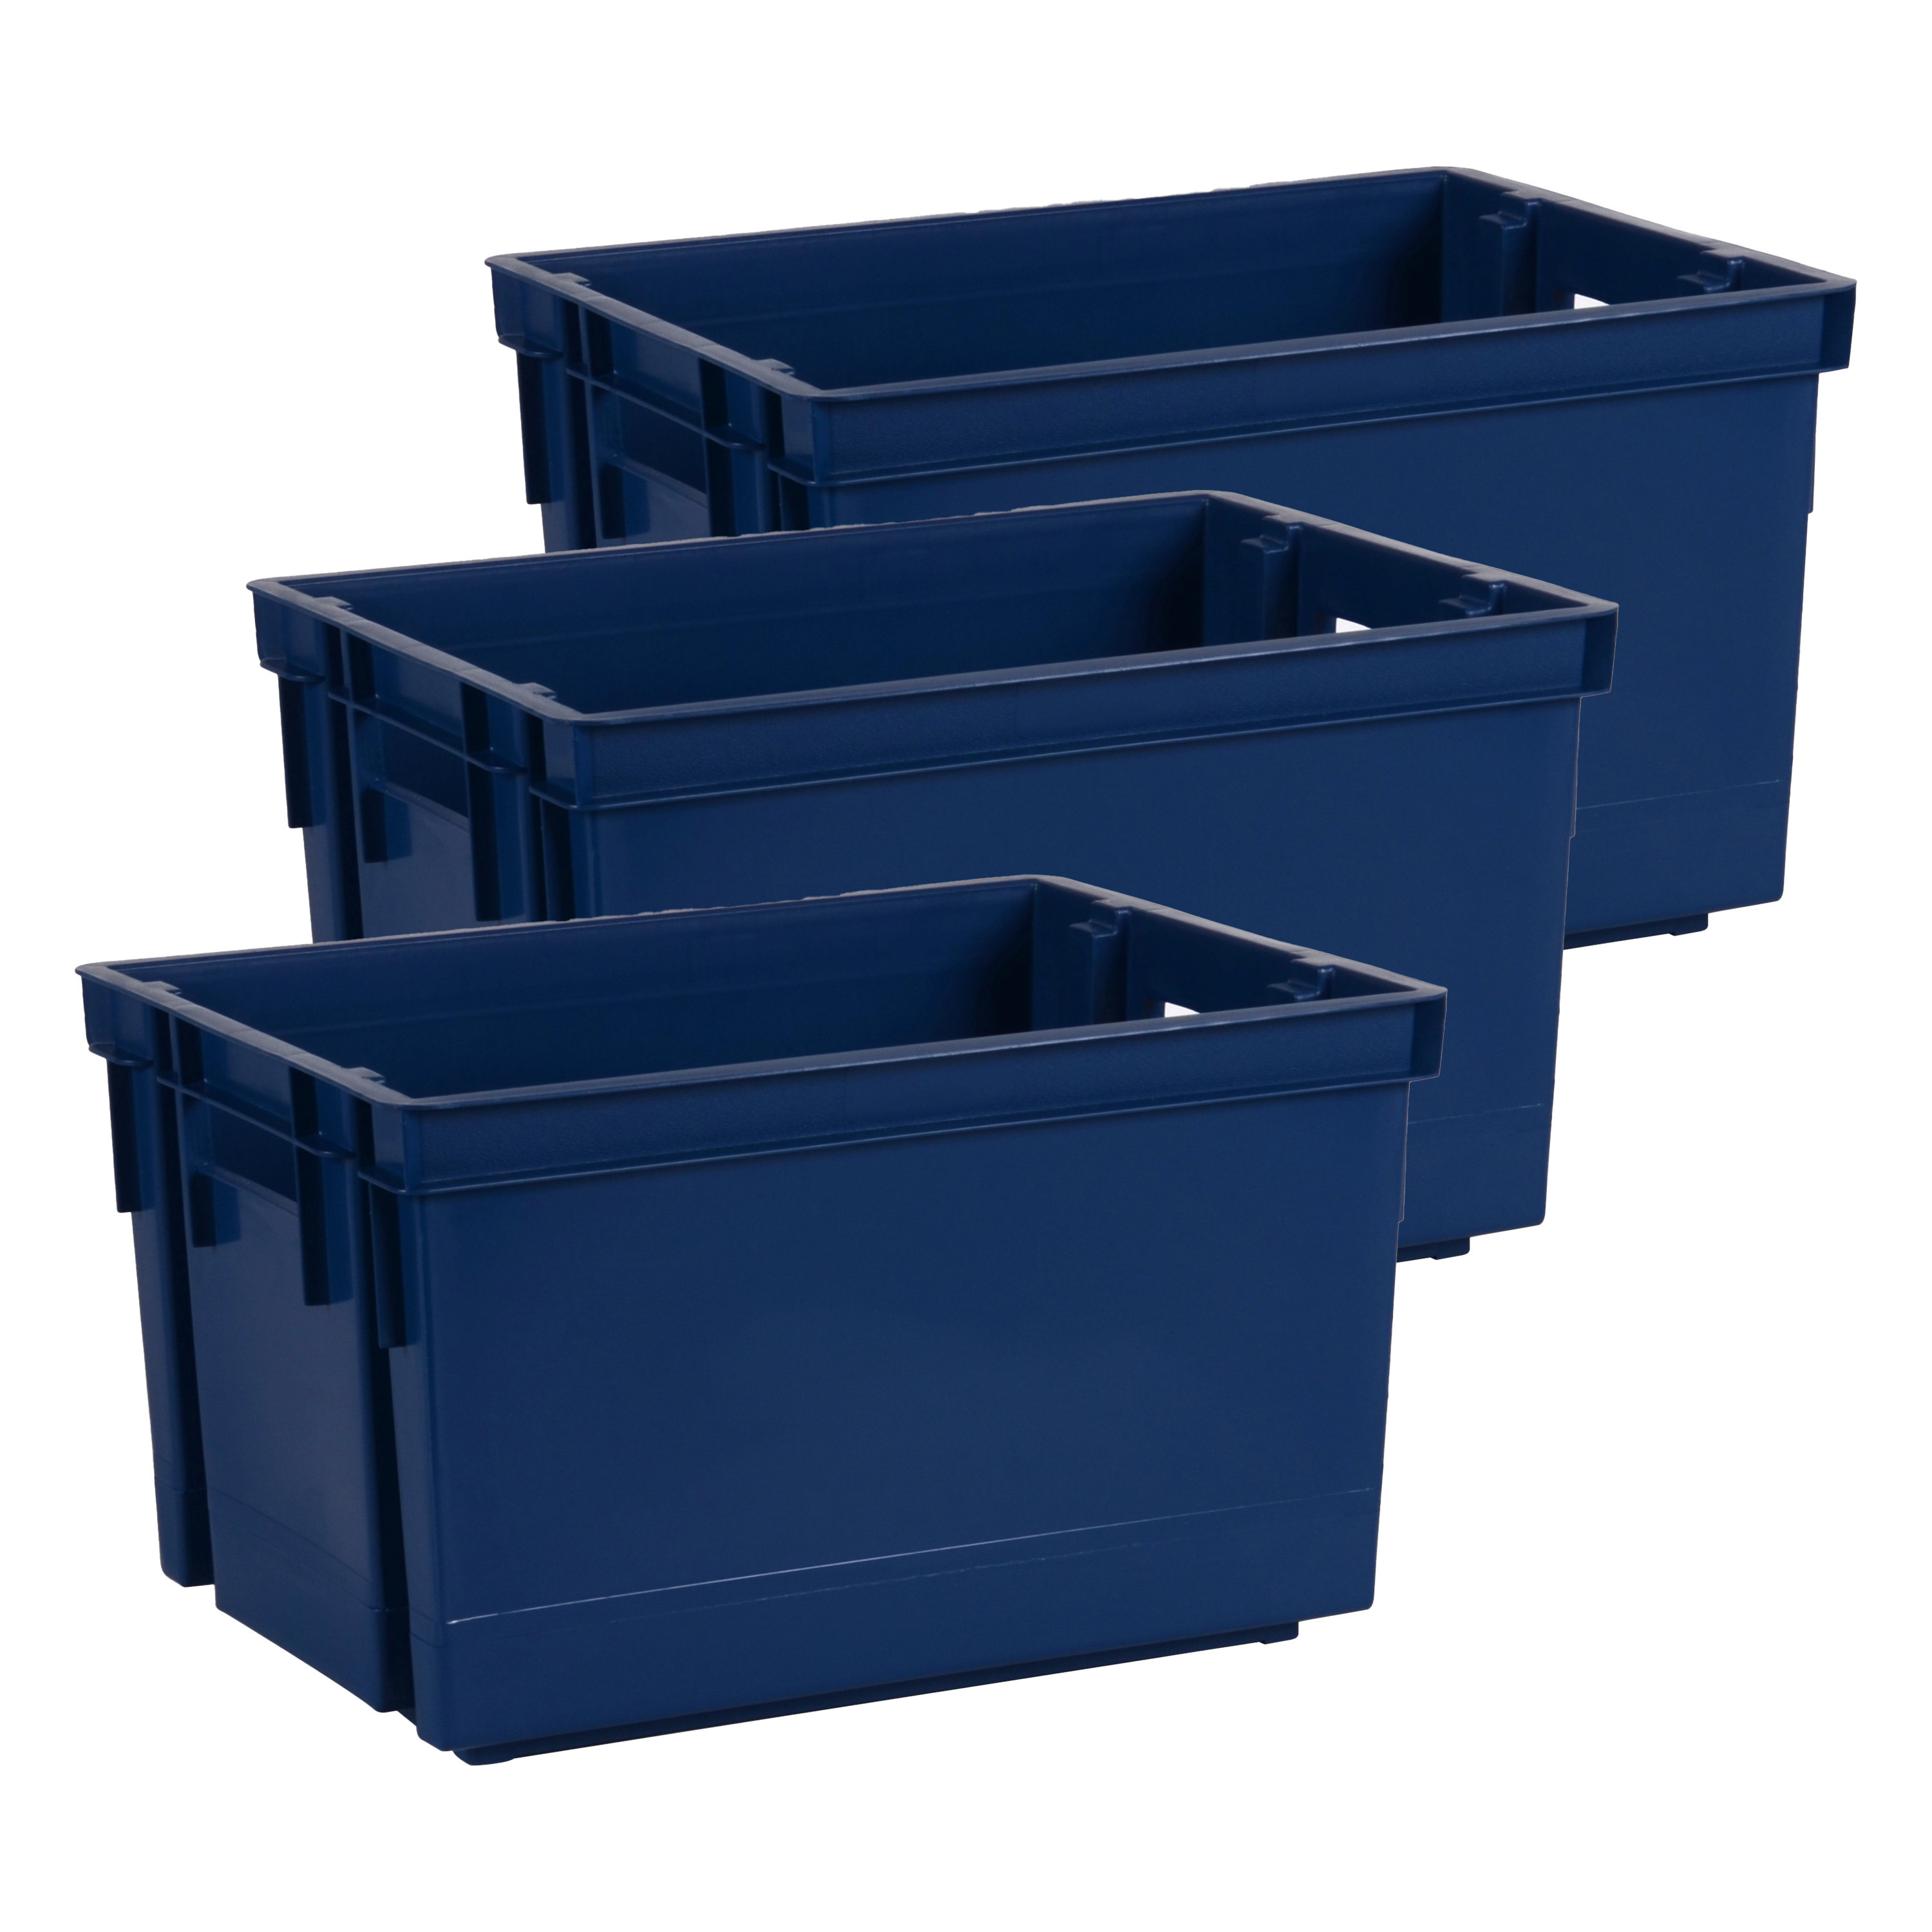 Opbergbox-opbergkrat 20 L 3x blauw kunststof 39 x 29 x 23 cm stapelbaar-nestbaar